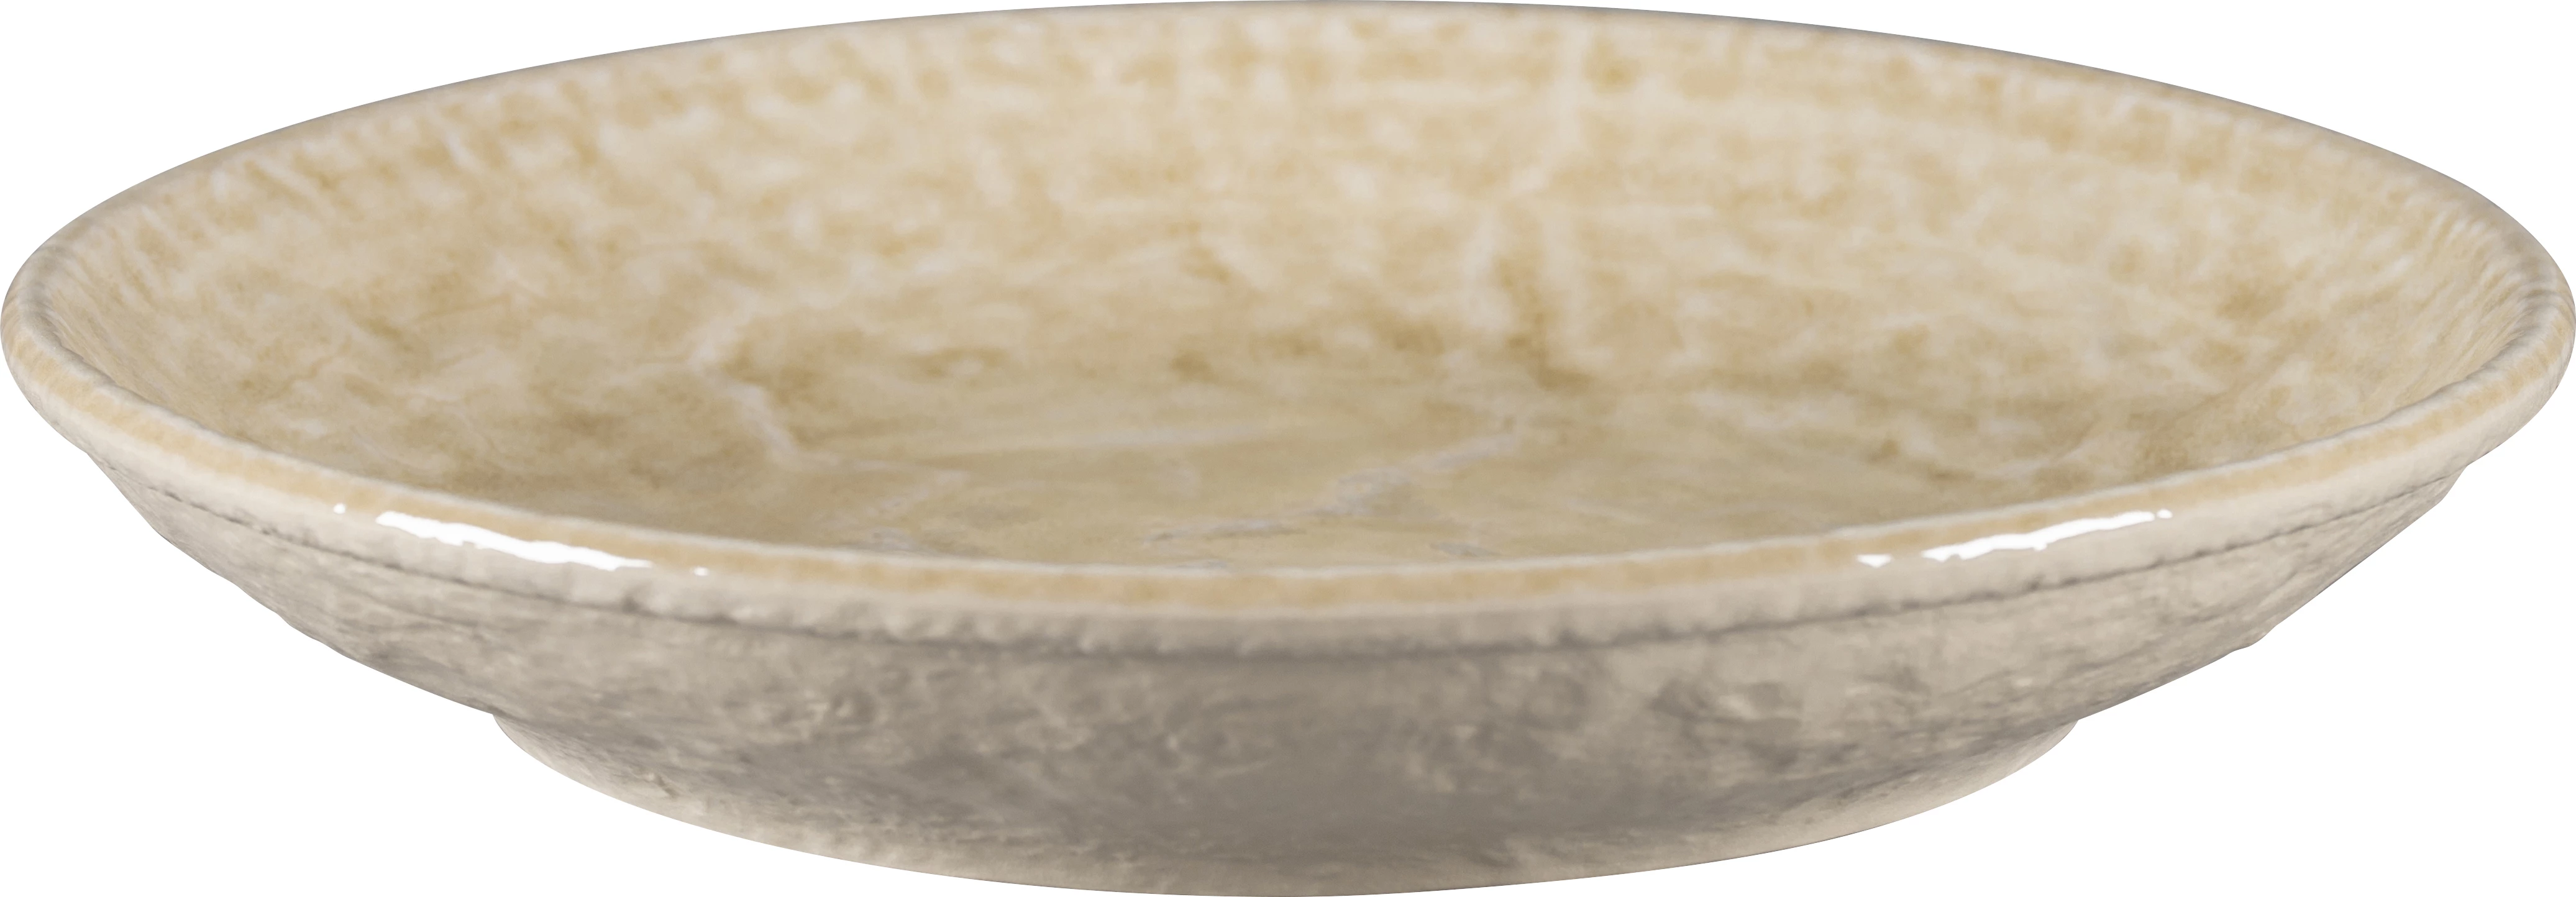 RAK Krush tallerken uden fane, dyb, sand, ø26,1 cm